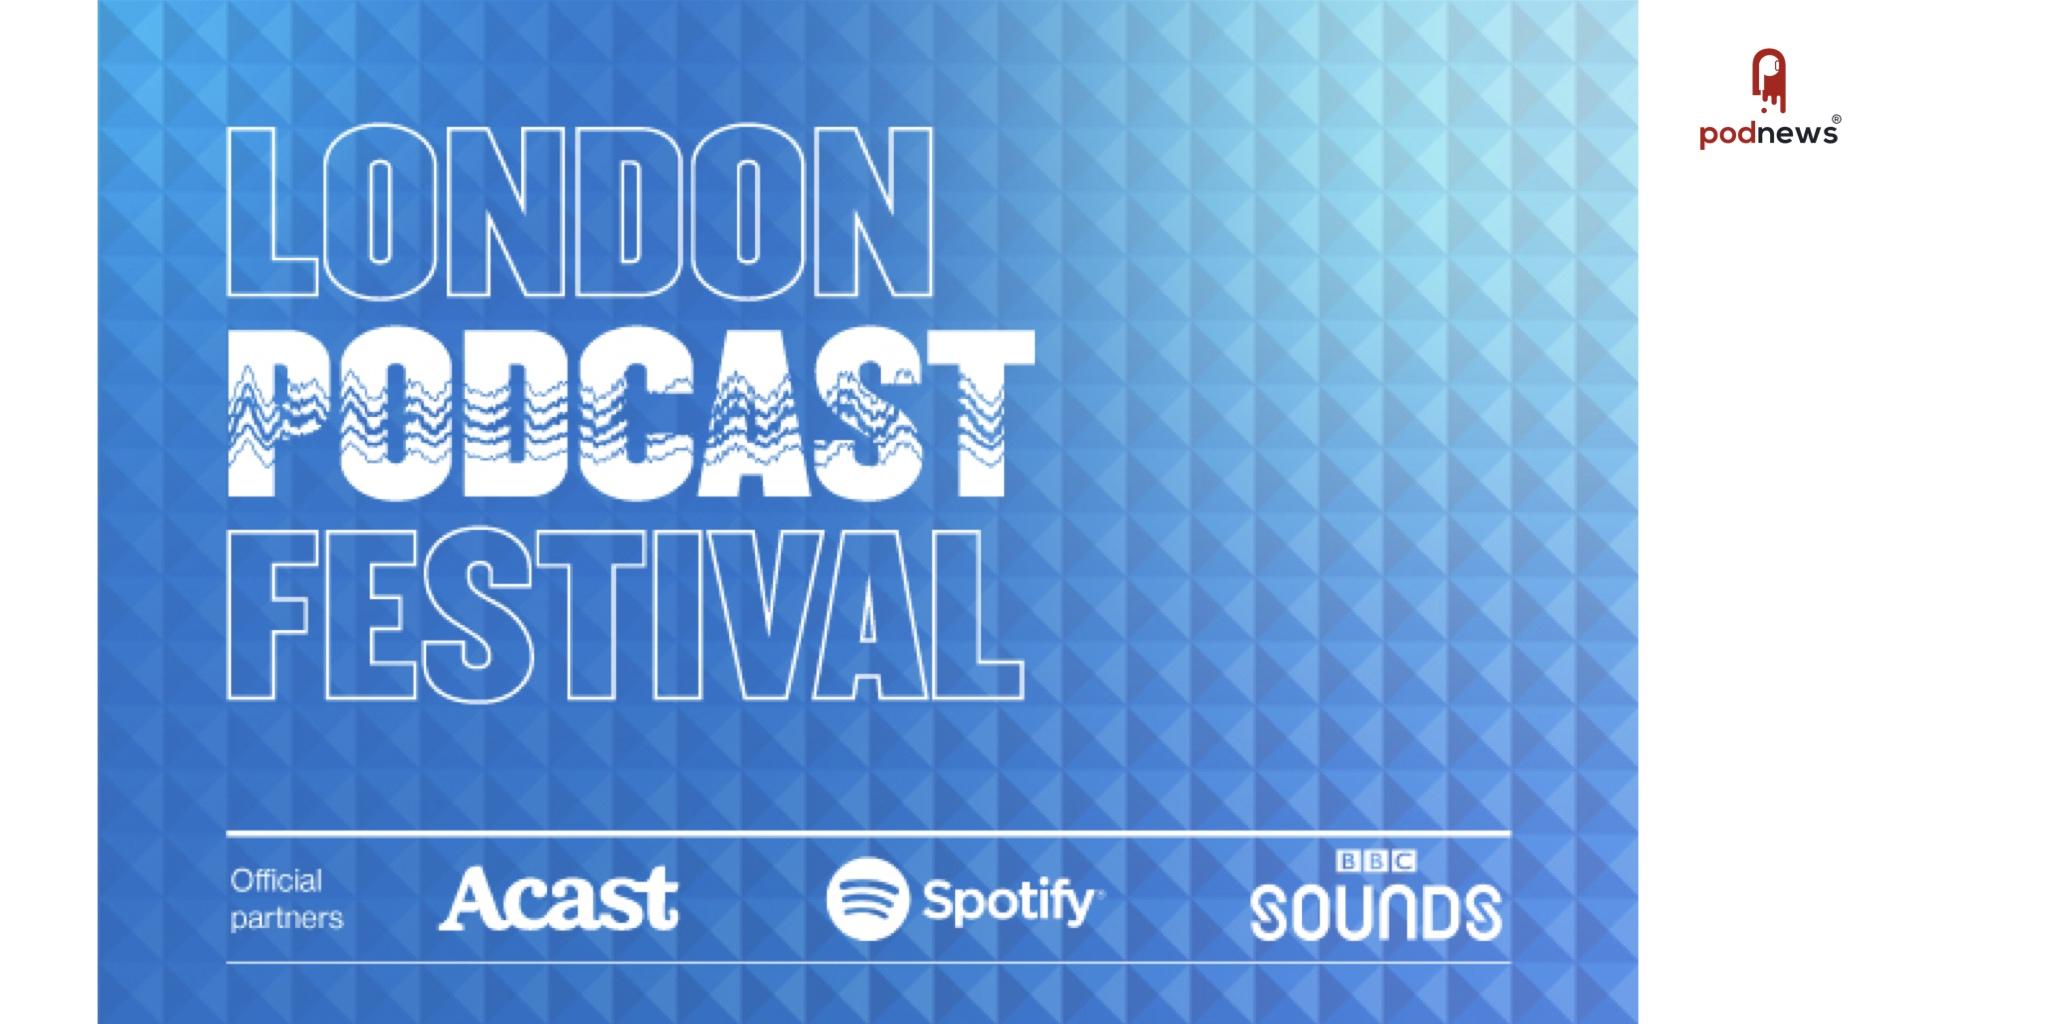 Audio Drama Day returns to London Podcast Festival 2021